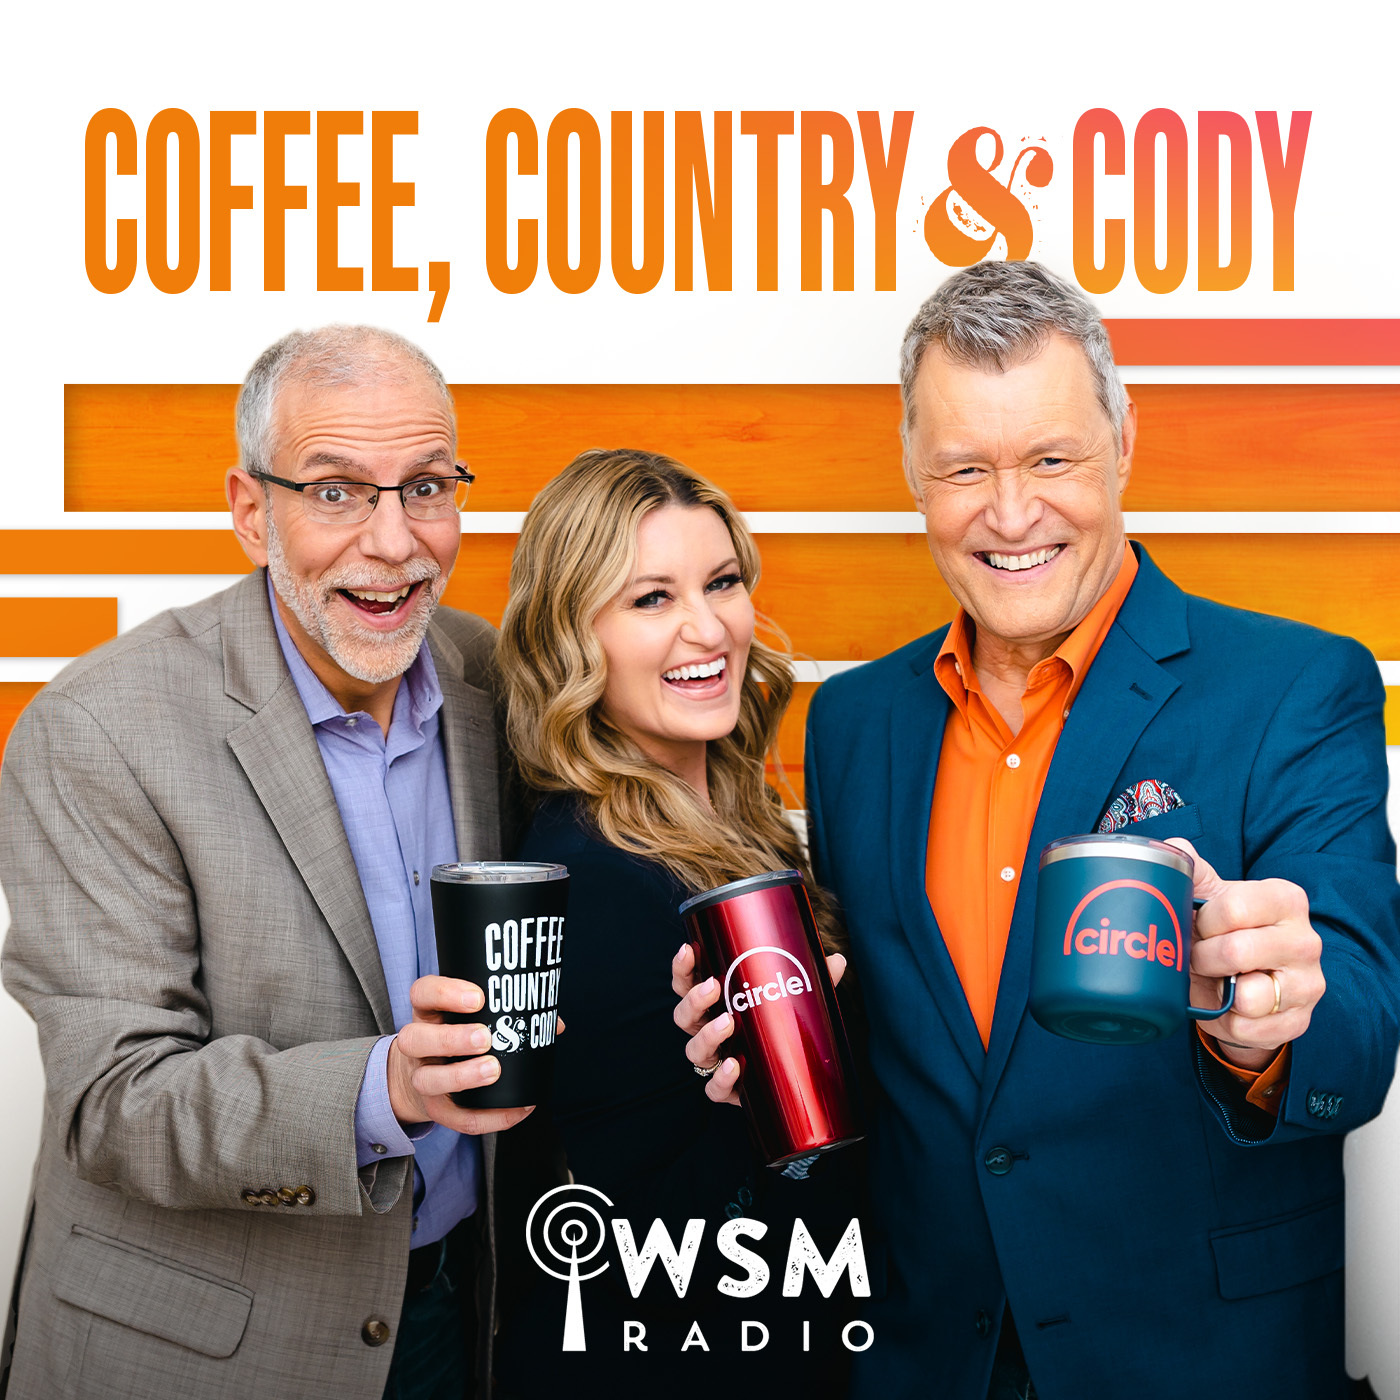 Coffee, Country & Cody with Ryan Bingham